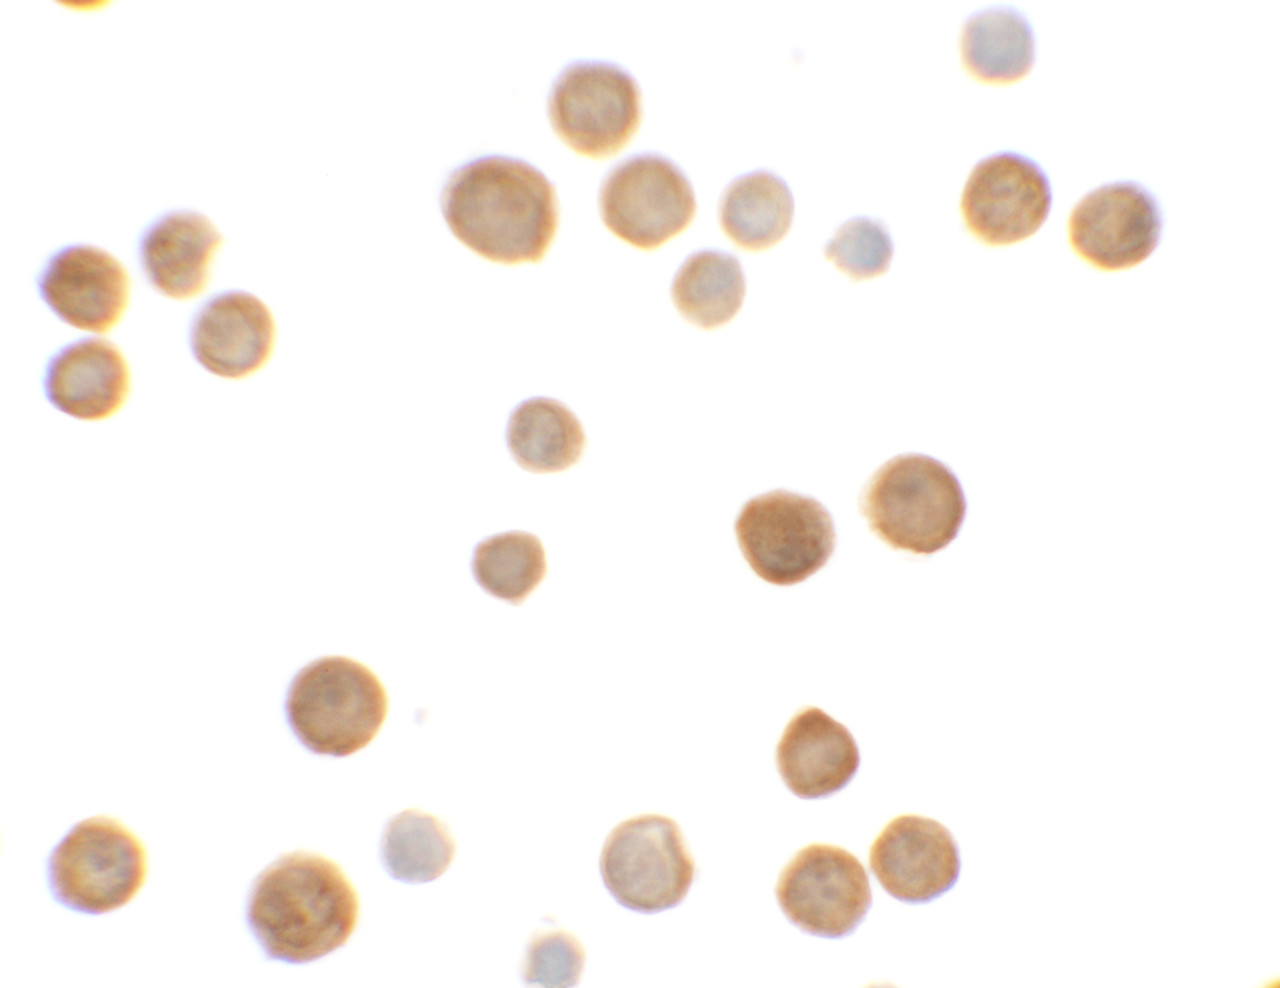 Immunocytochemistry of ECRG4 in HeLa cells with ECRG4 antibody at 5 ug/mL.